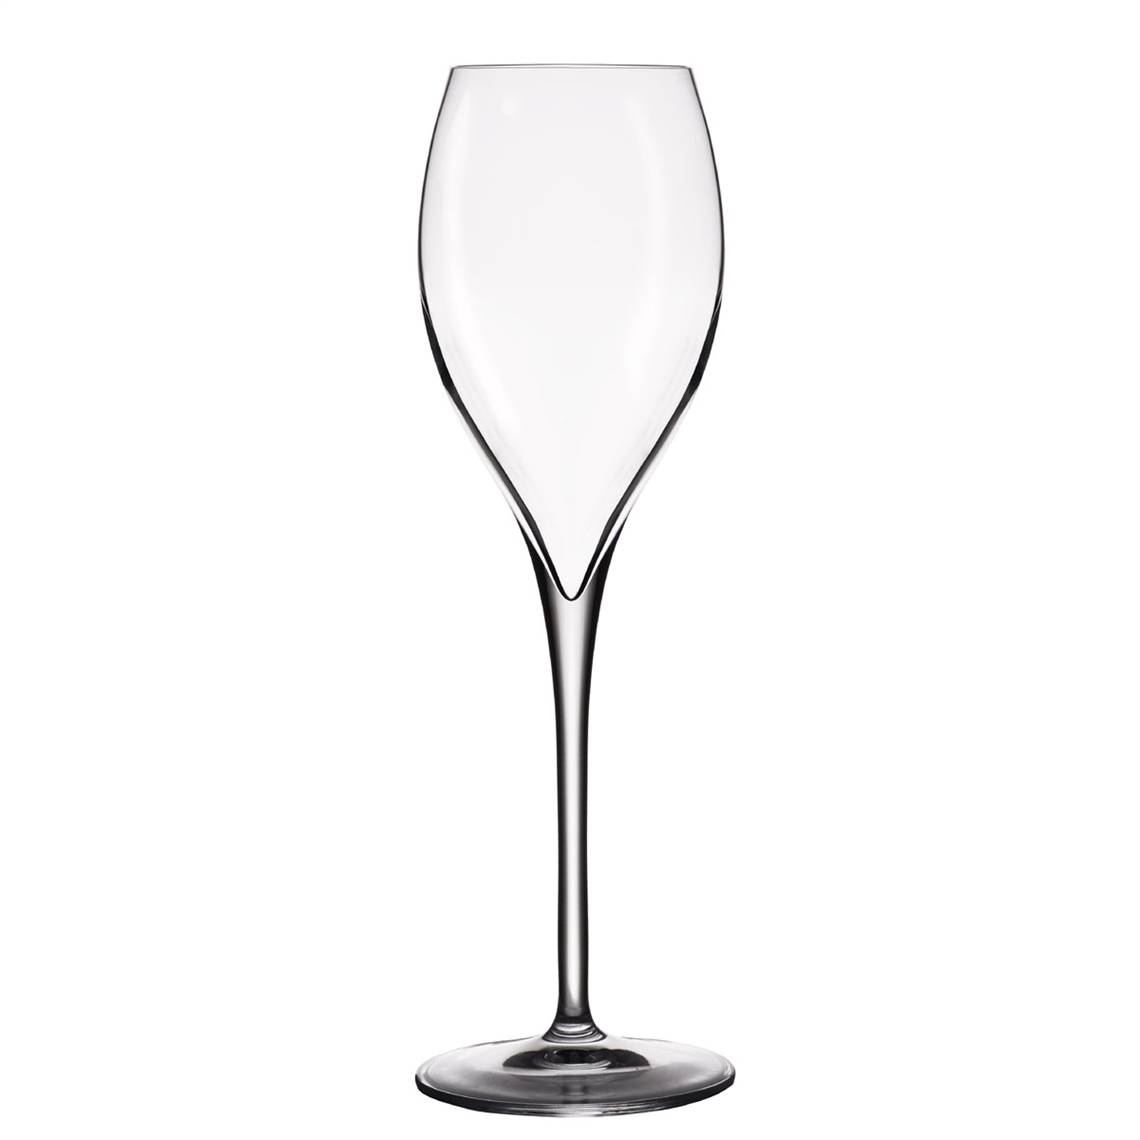 Lehmann Glass Opale Champagne / Sparkling Wine Glass 210ml - Set of 6